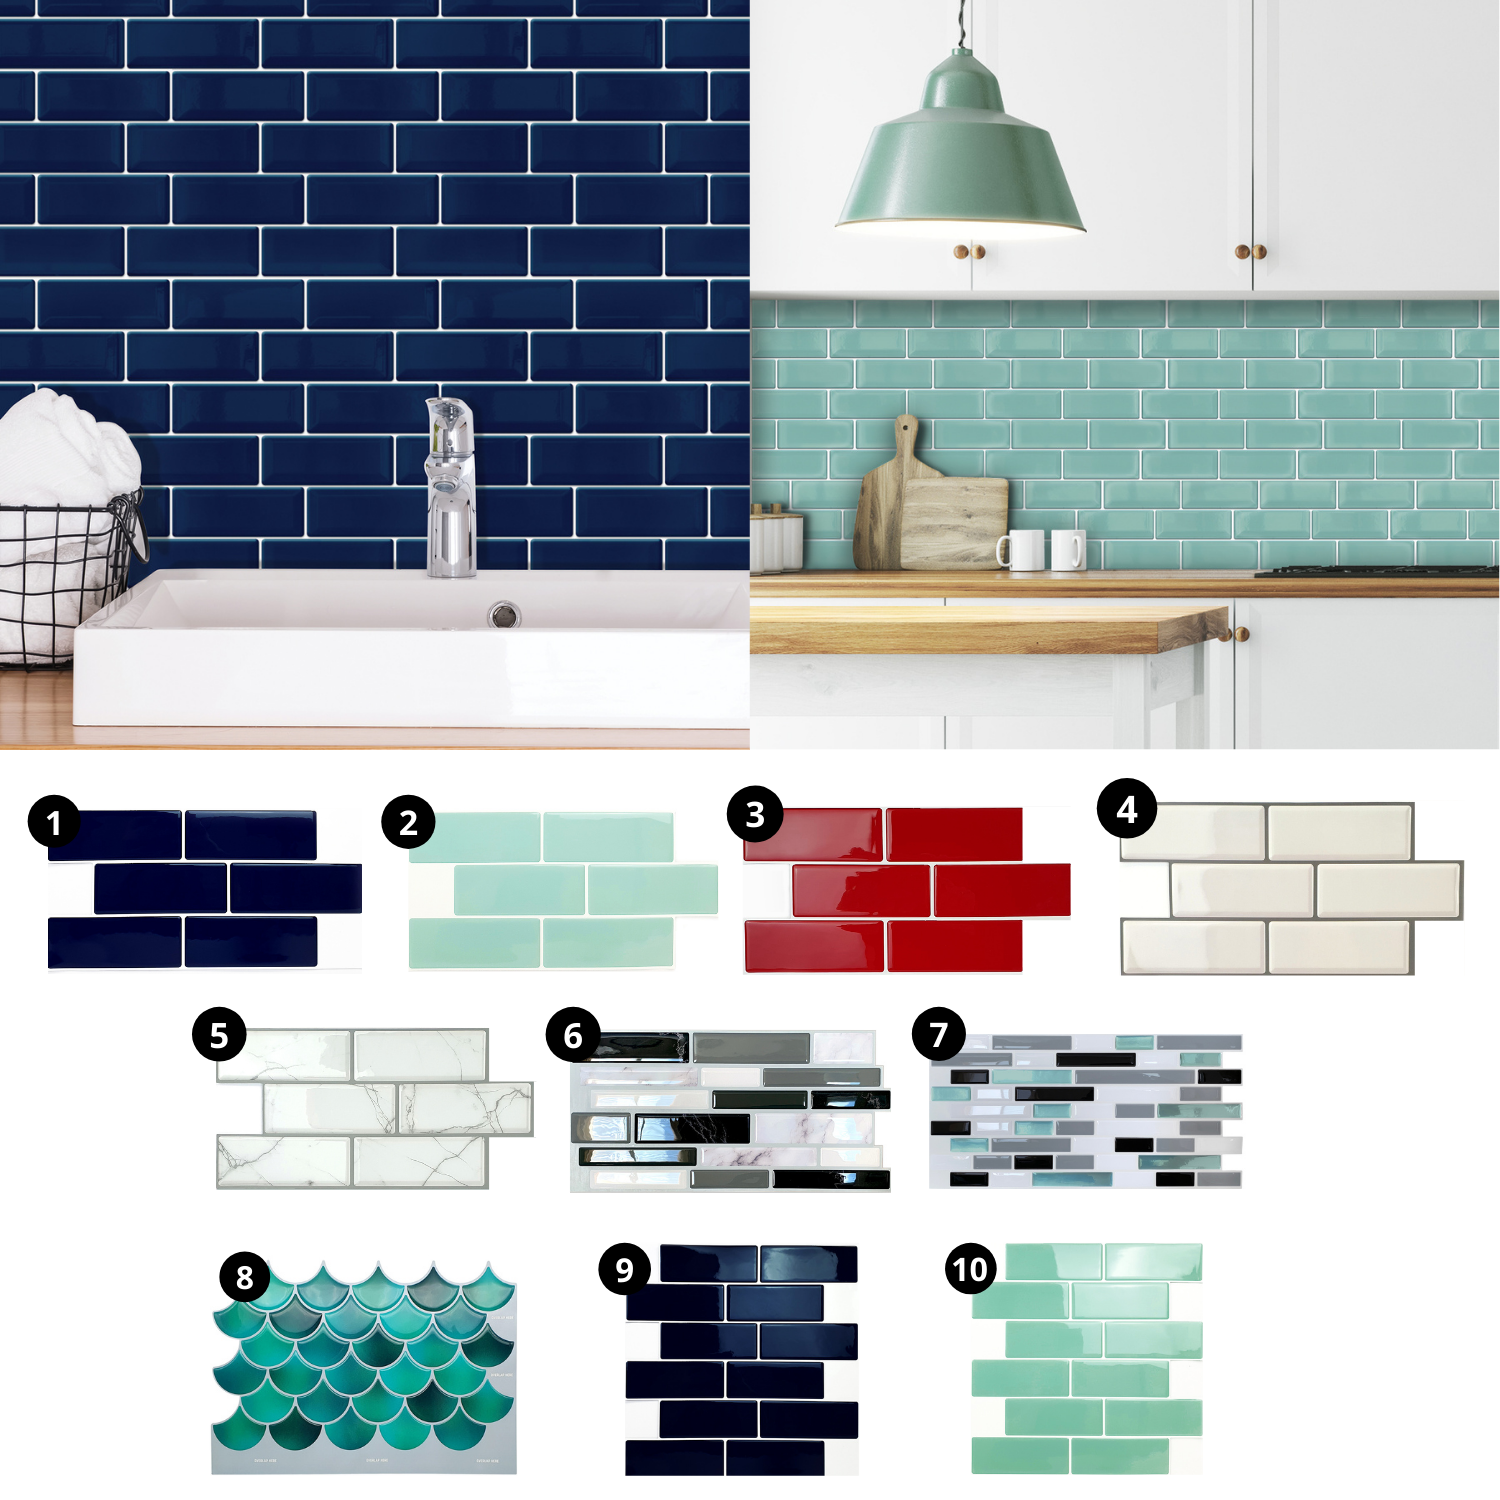 Walplus Removable Self-Adhesive Vinyl Home Living Bedroom Kitchen DecorGift Blue Tiles Wall Stickers Peel and Stick Tiles,Tile Paint,Tile Sticker,Backsplash Tile,Splashback 